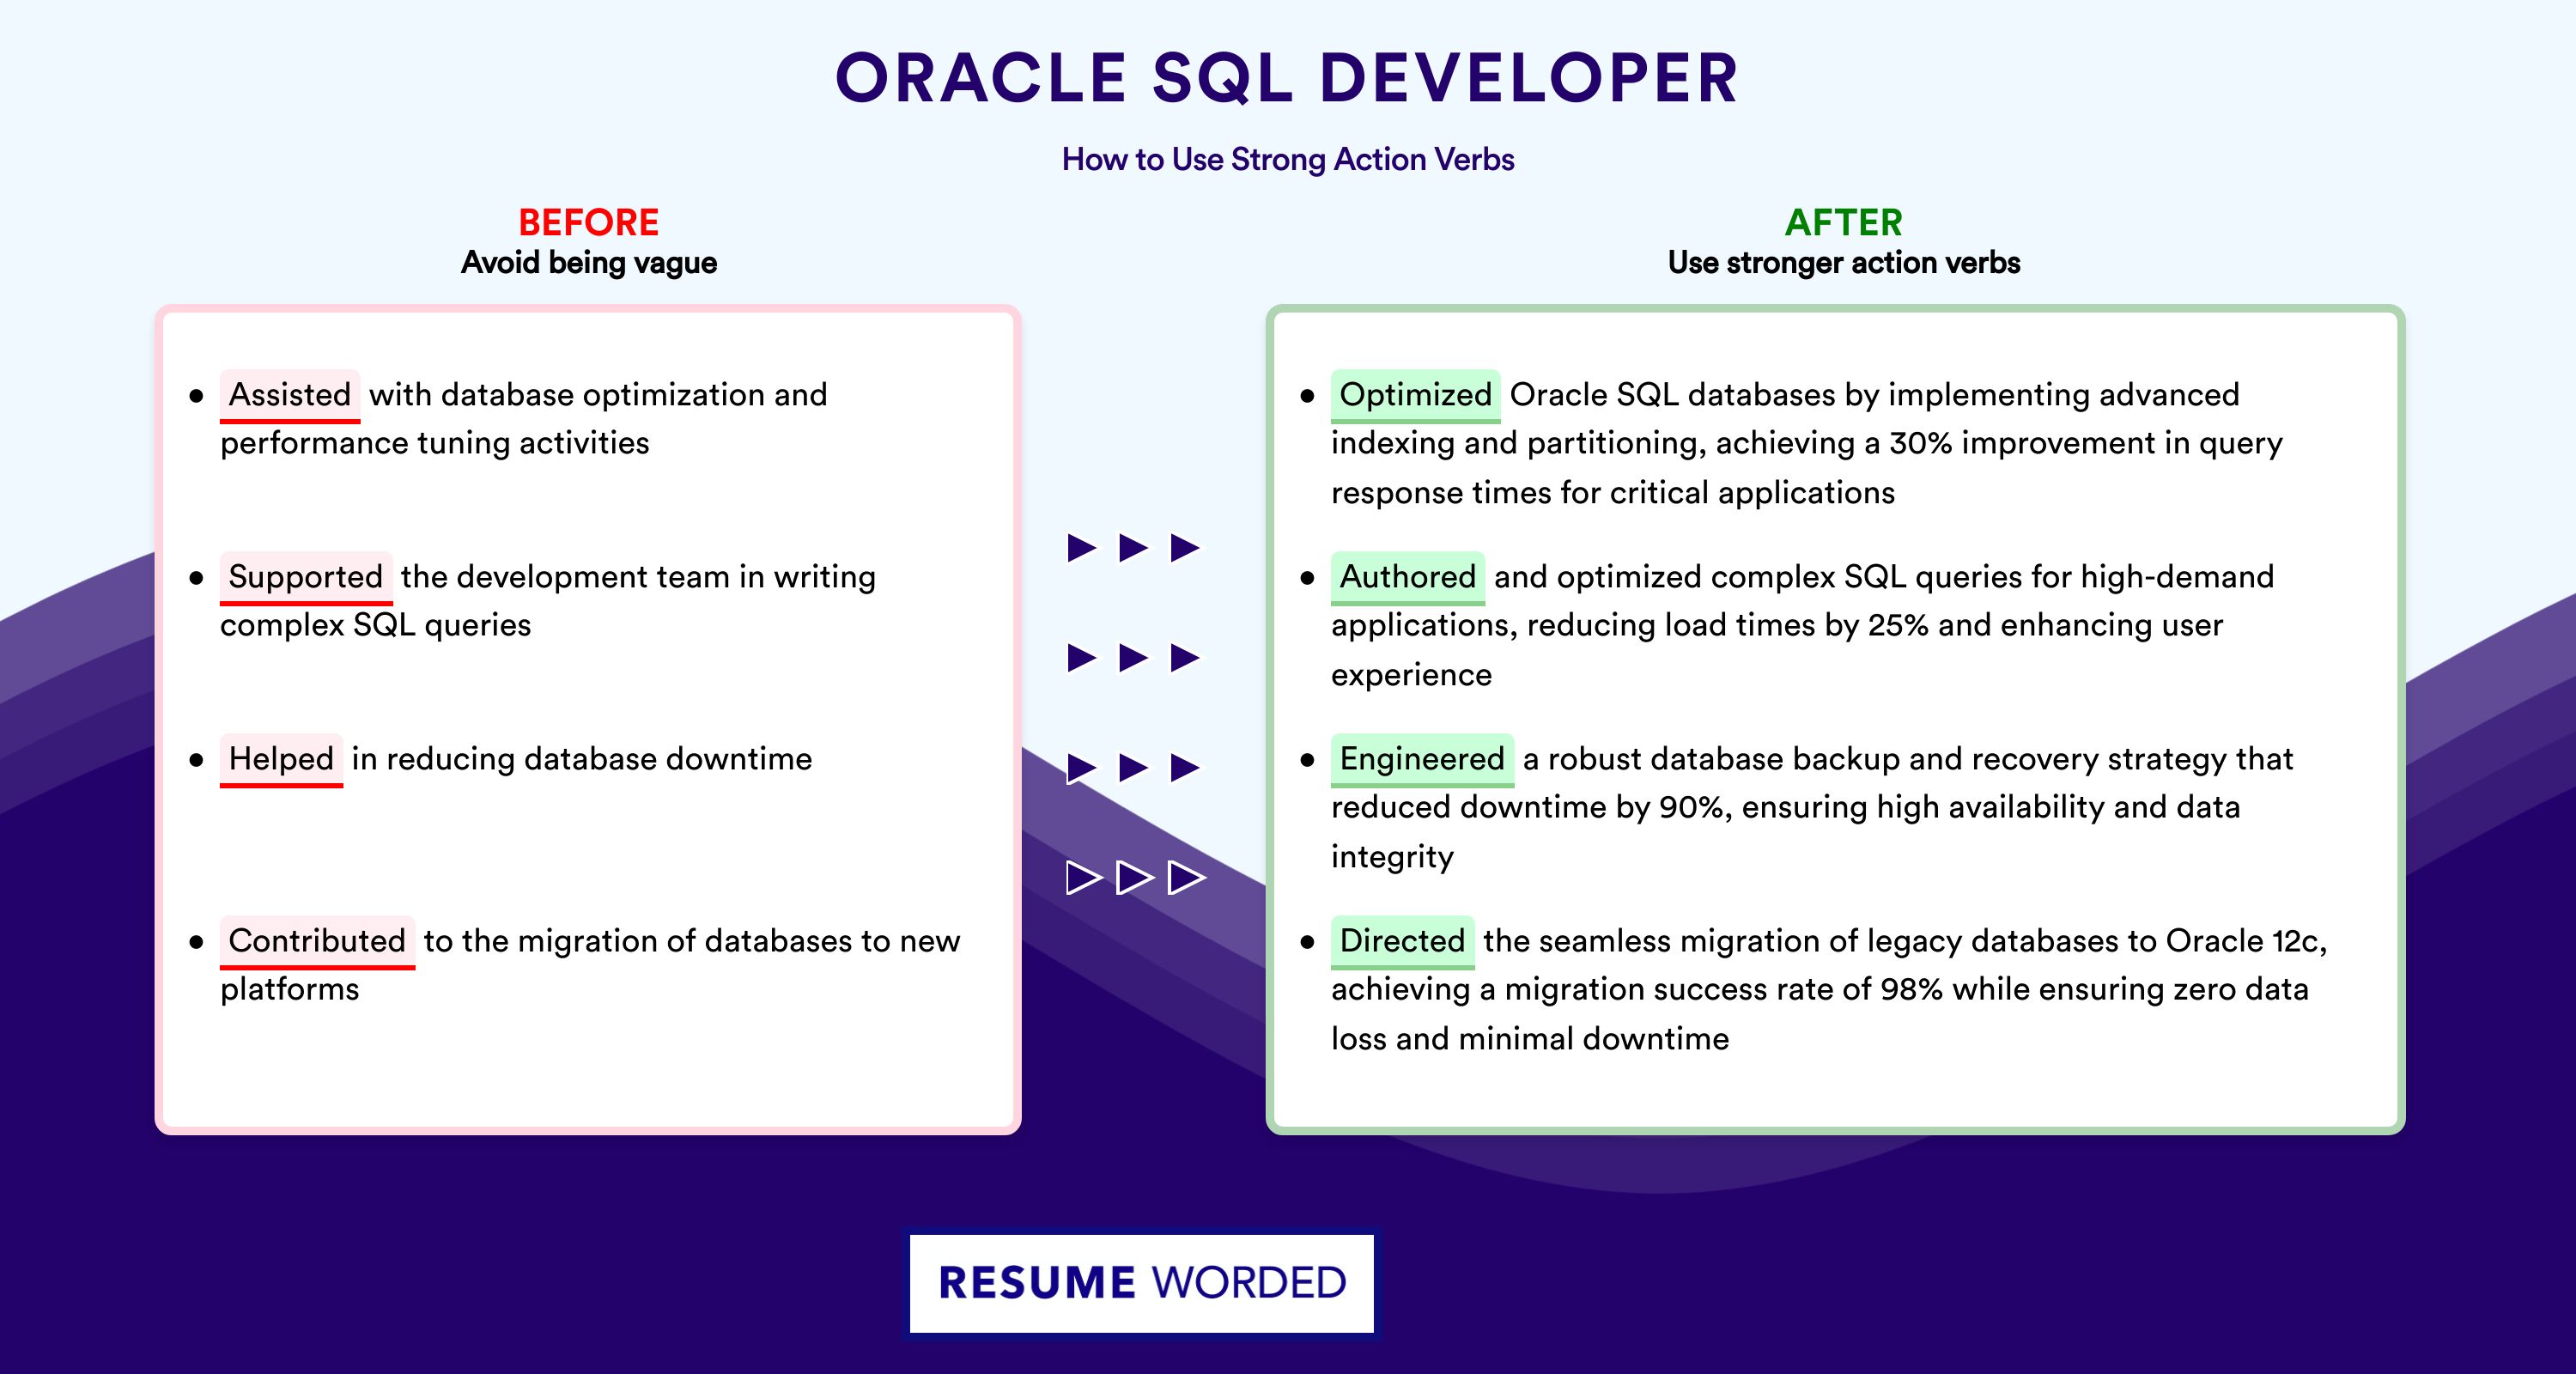 Action Verbs for Oracle SQL Developer